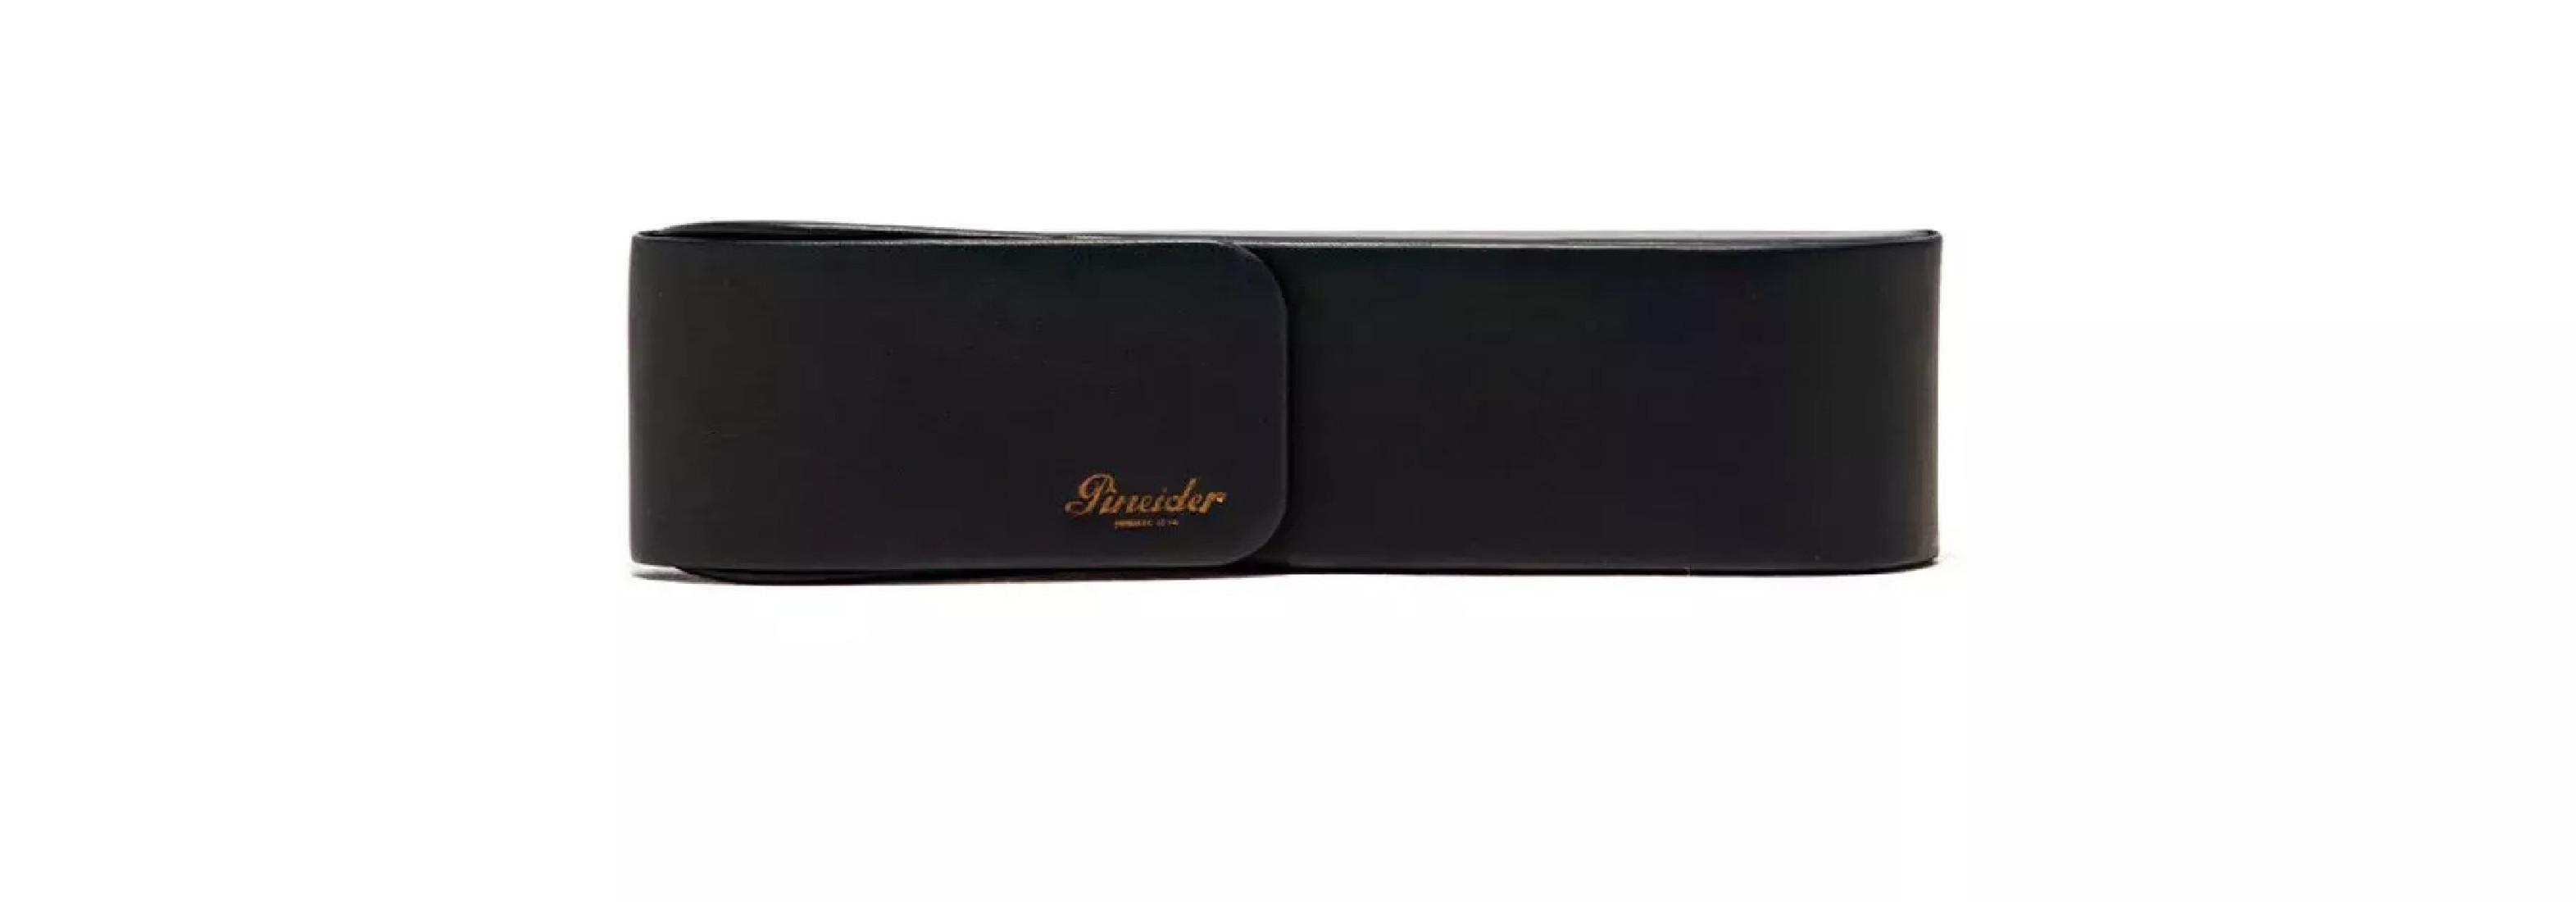 Pineider leather case black for 2 pens